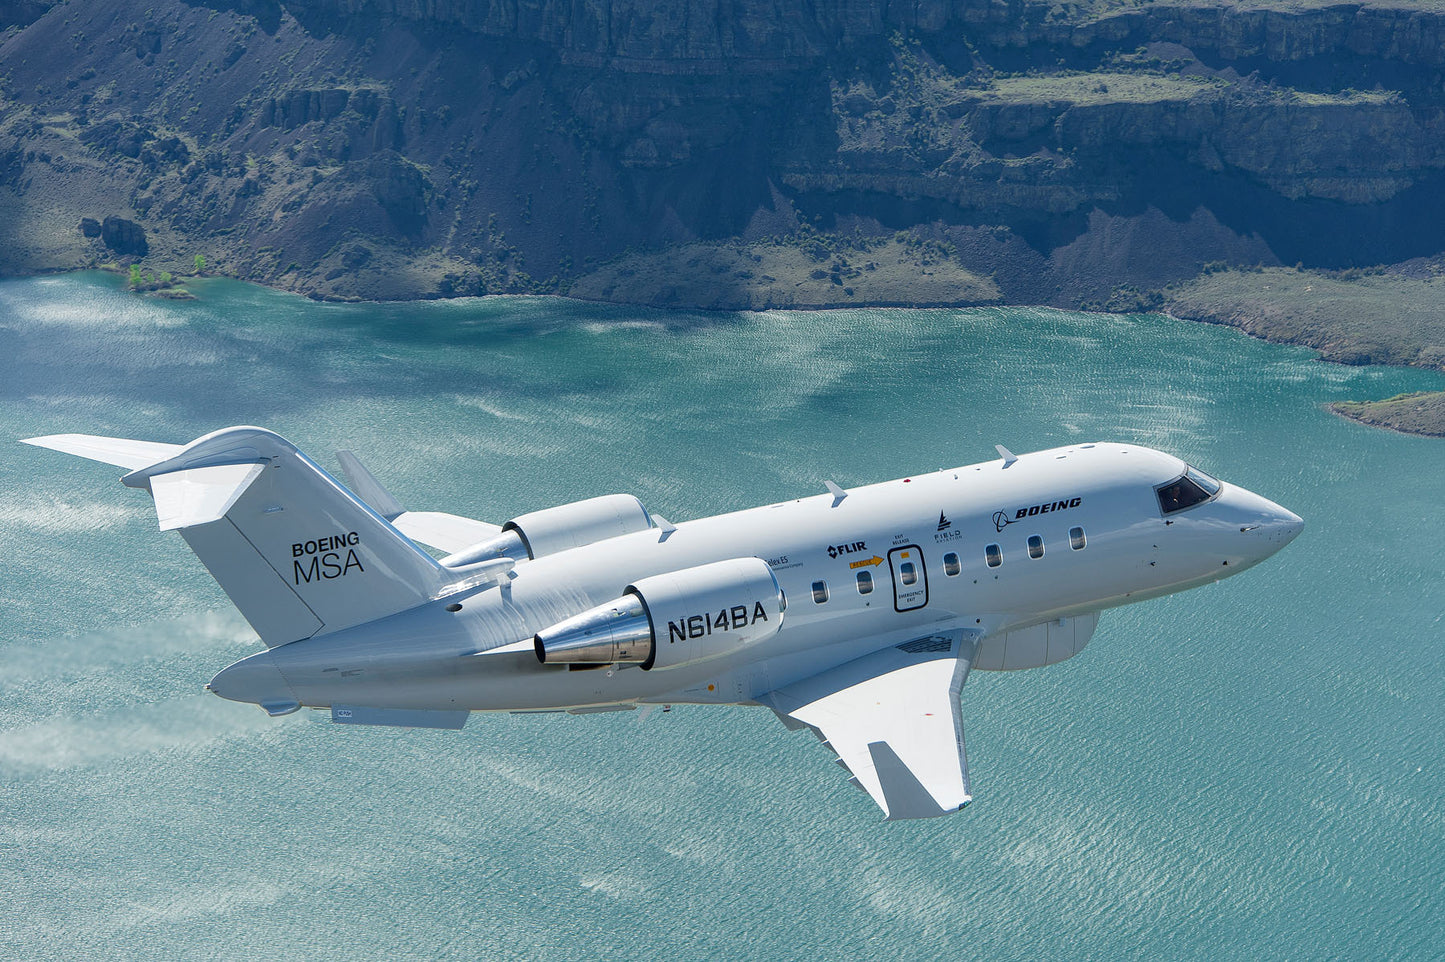 Boeing Maritime Surveillance Aircraft (MSA) In Flight Over Water, 2014 BI43990